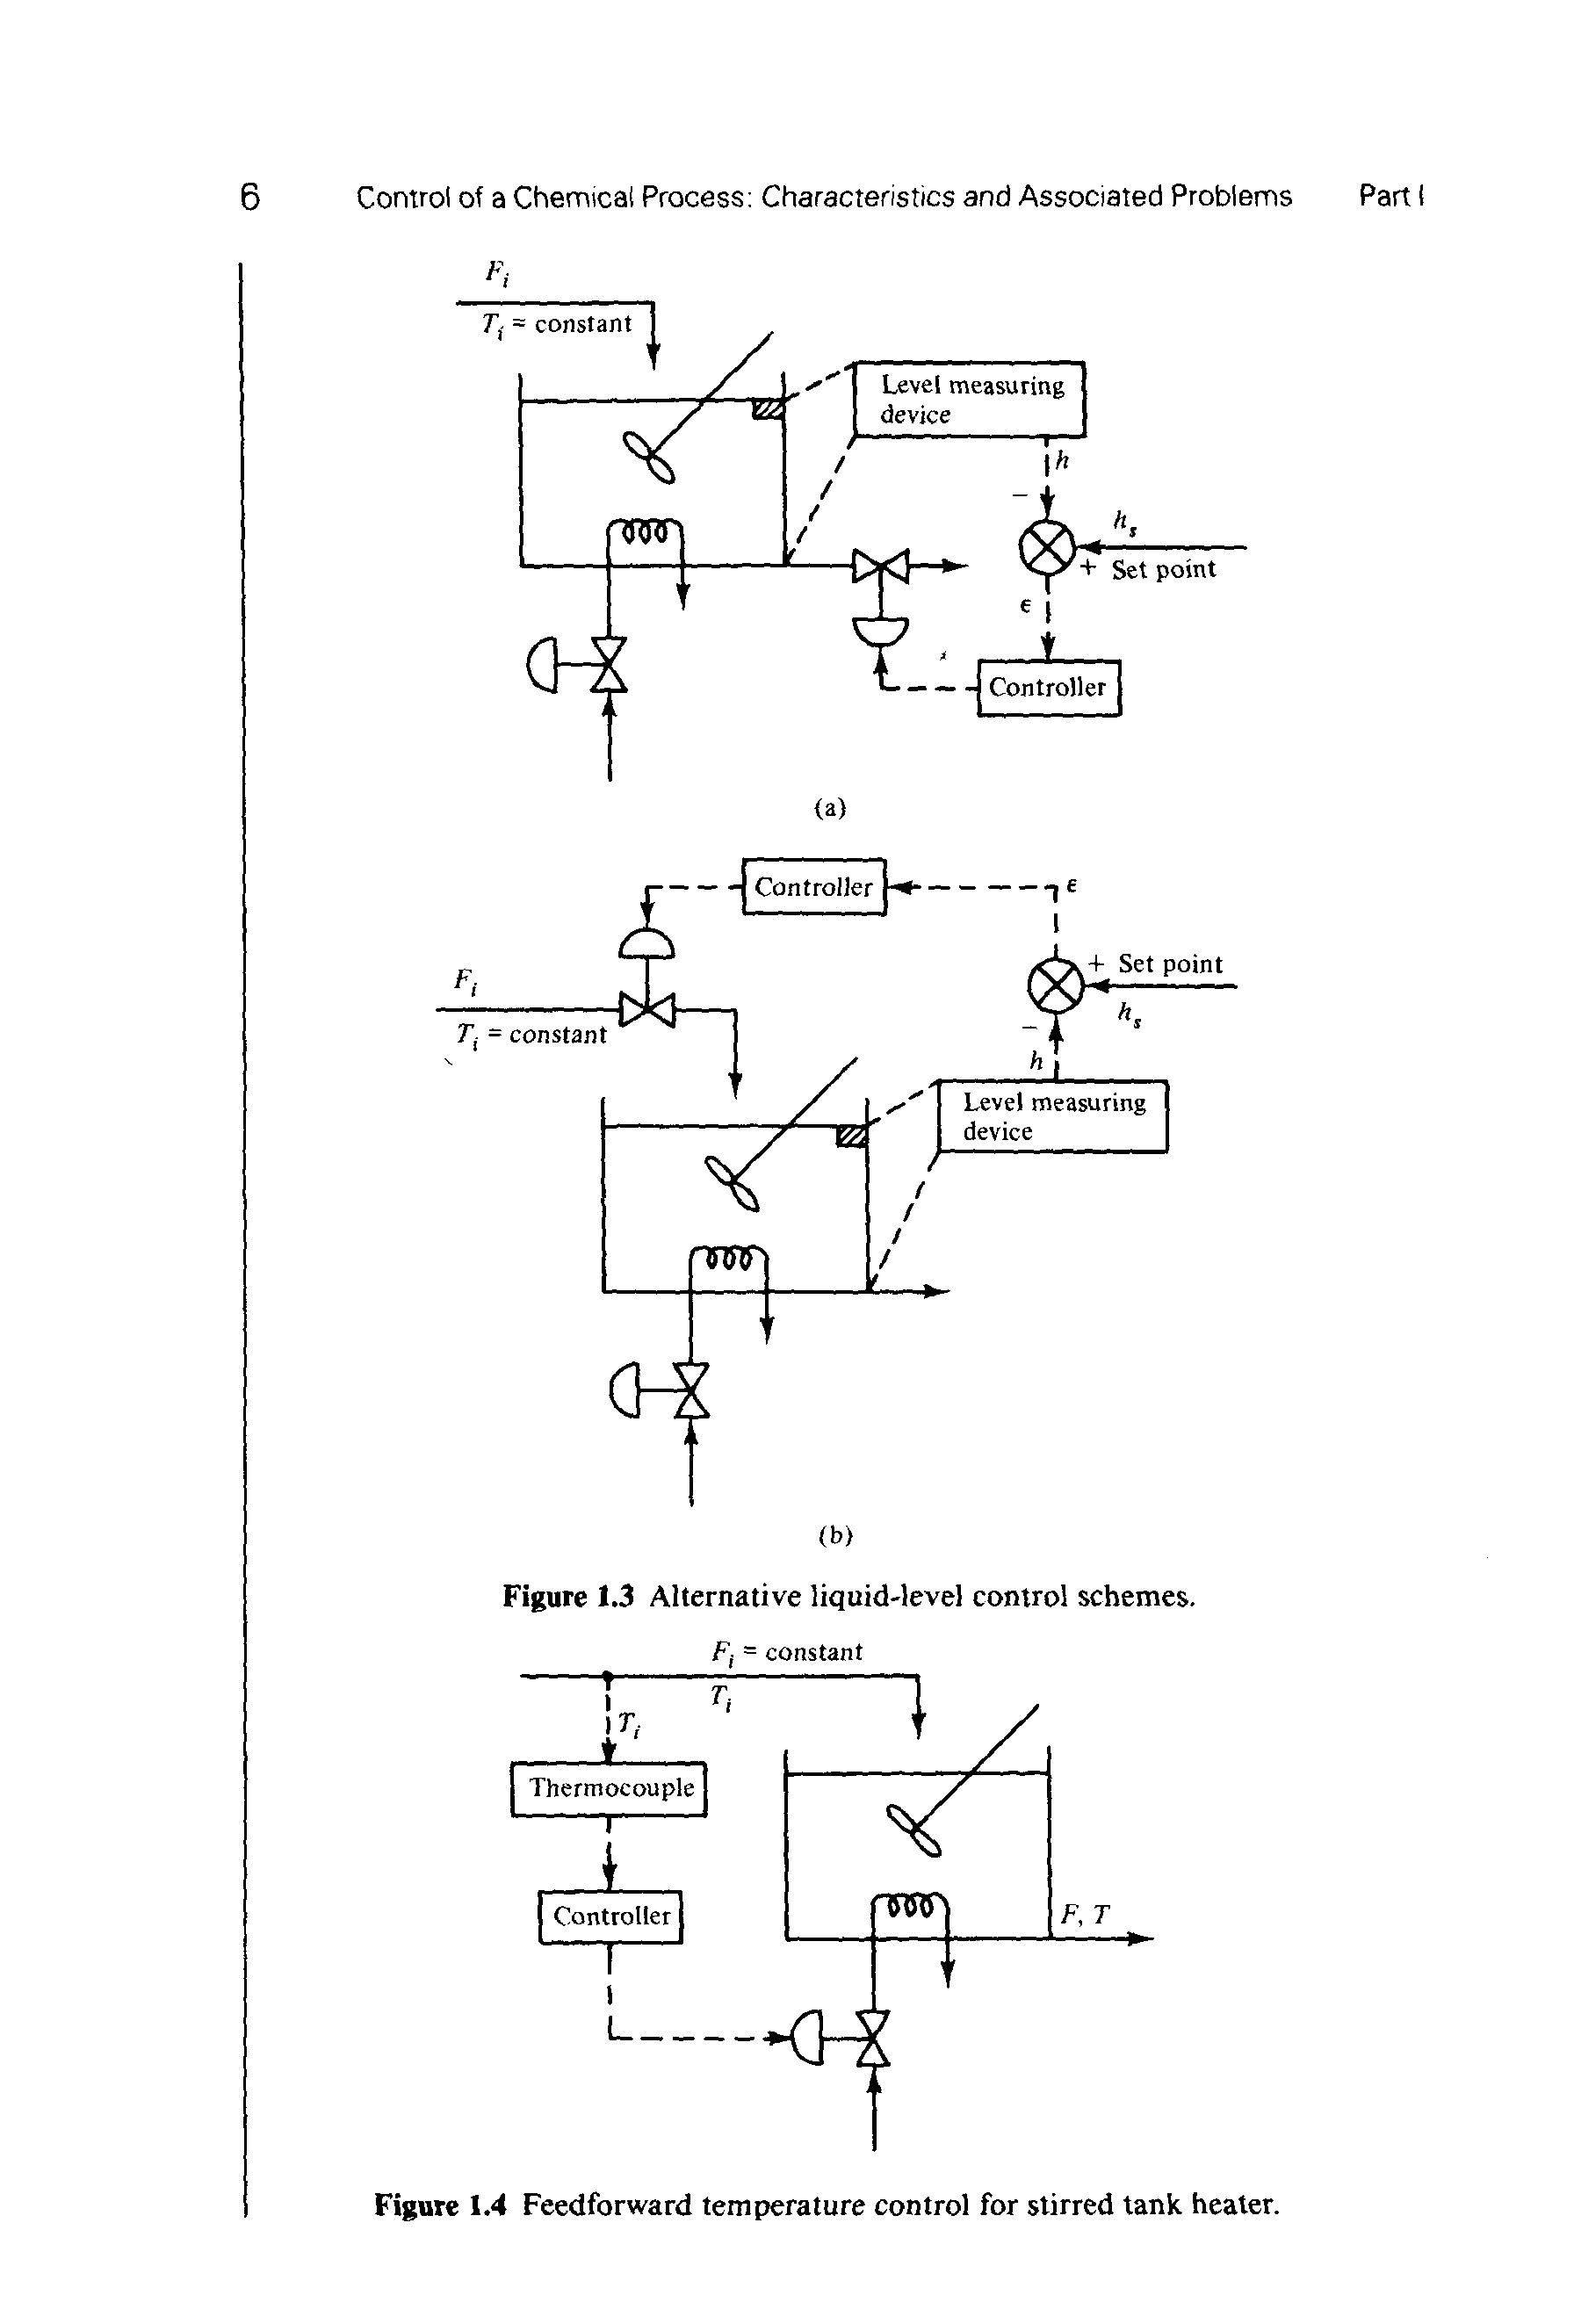 Figure 1.4 Feedforward temperature control for stirred tank heater.